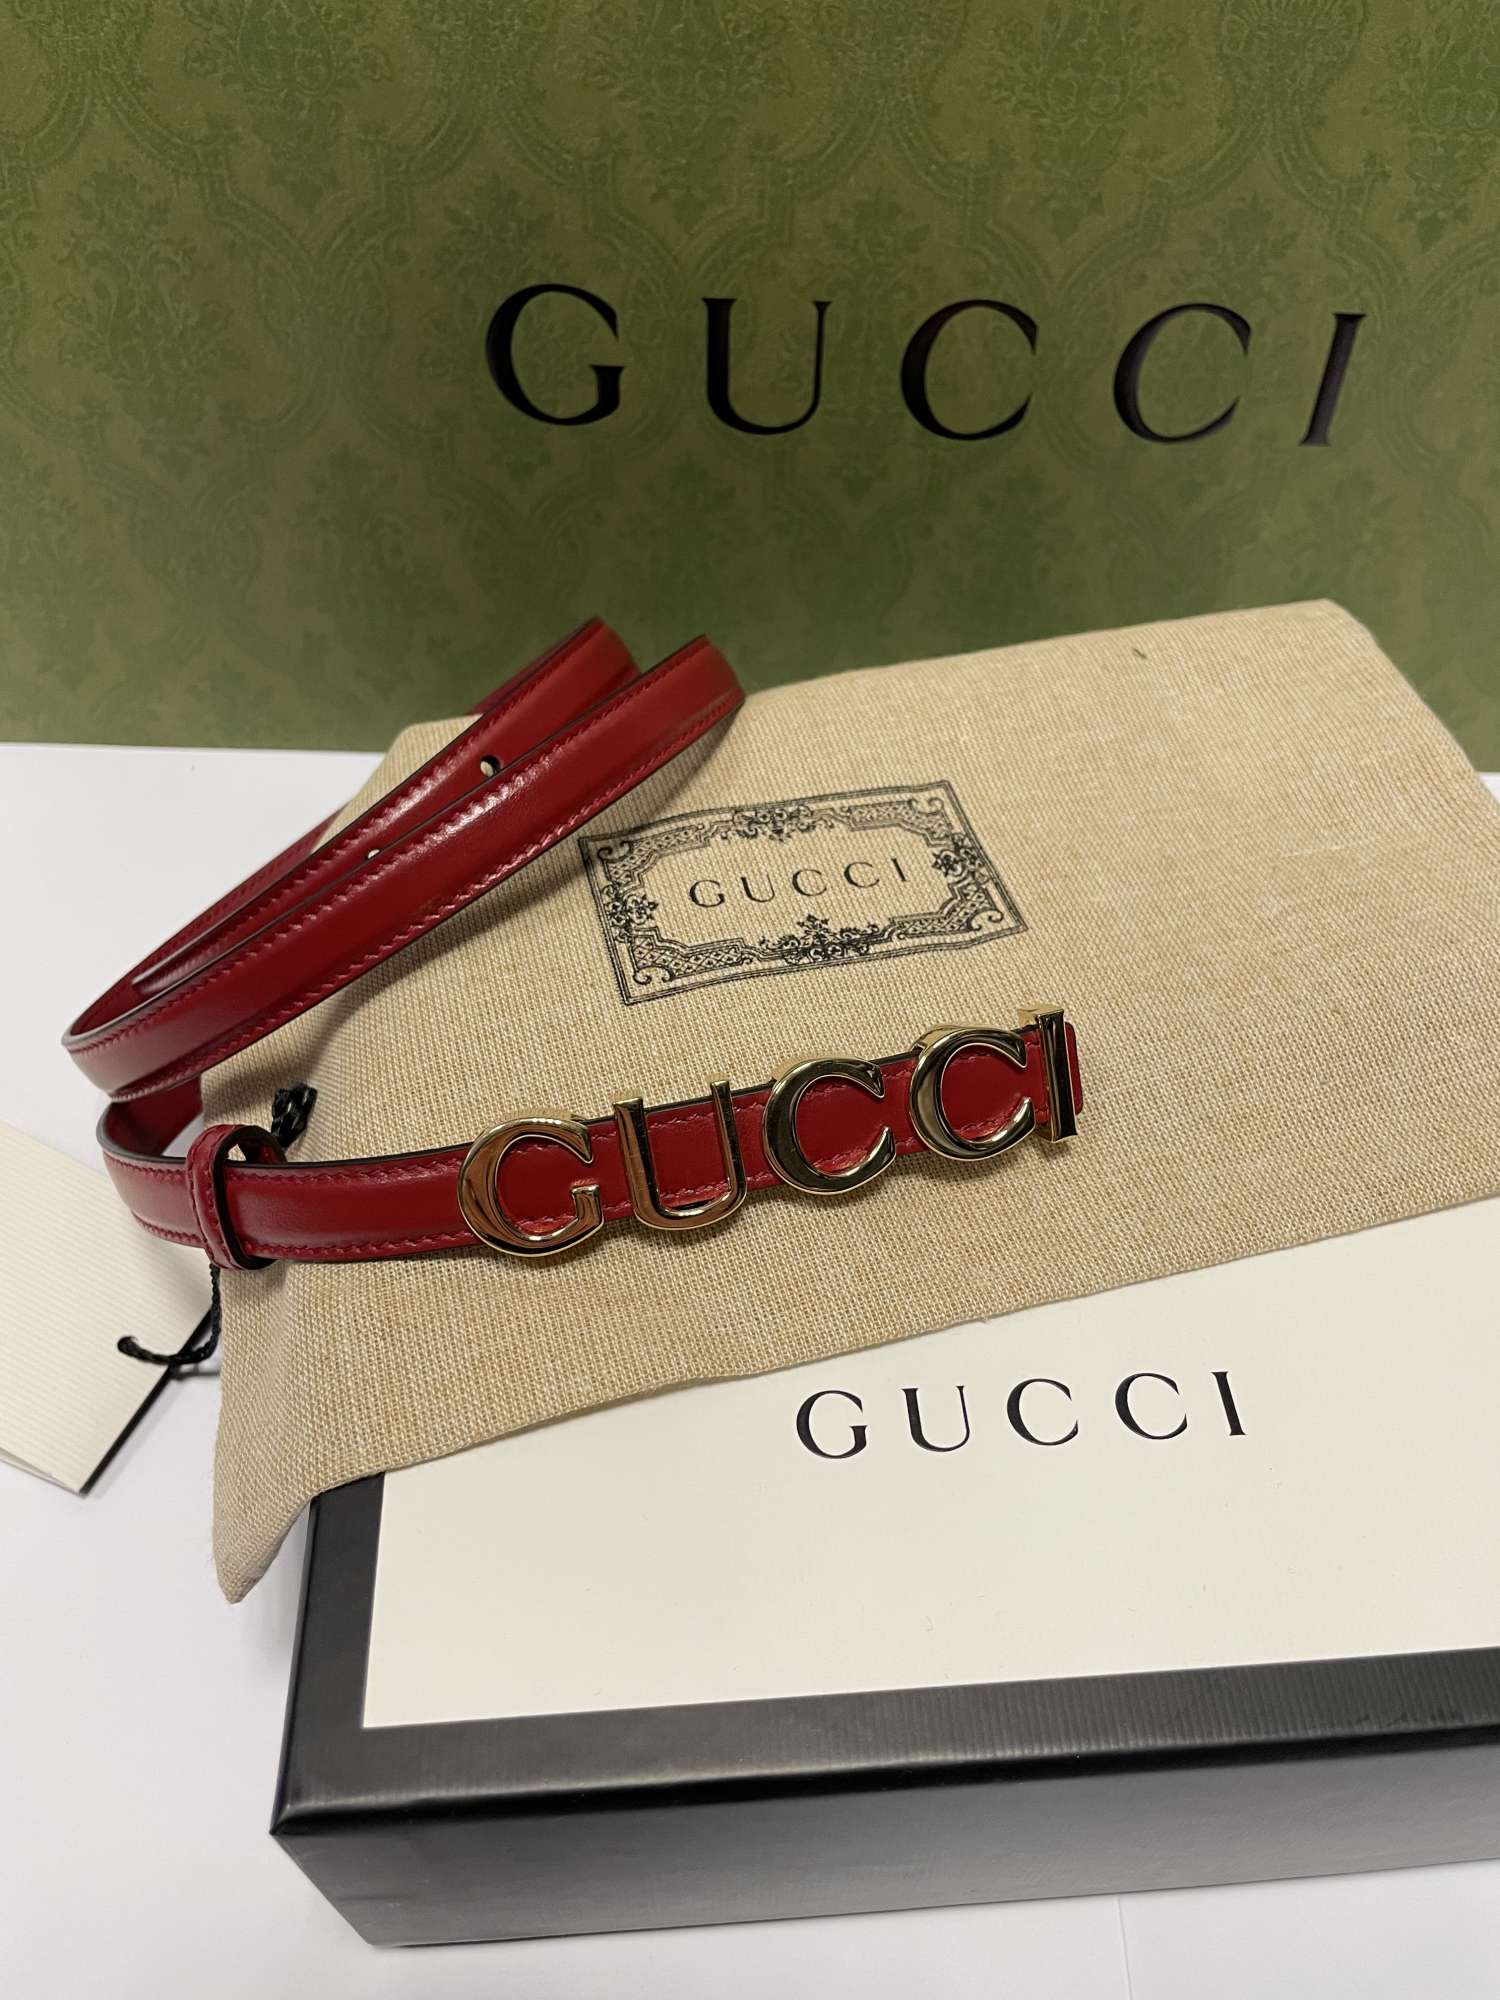 Gucci opasok